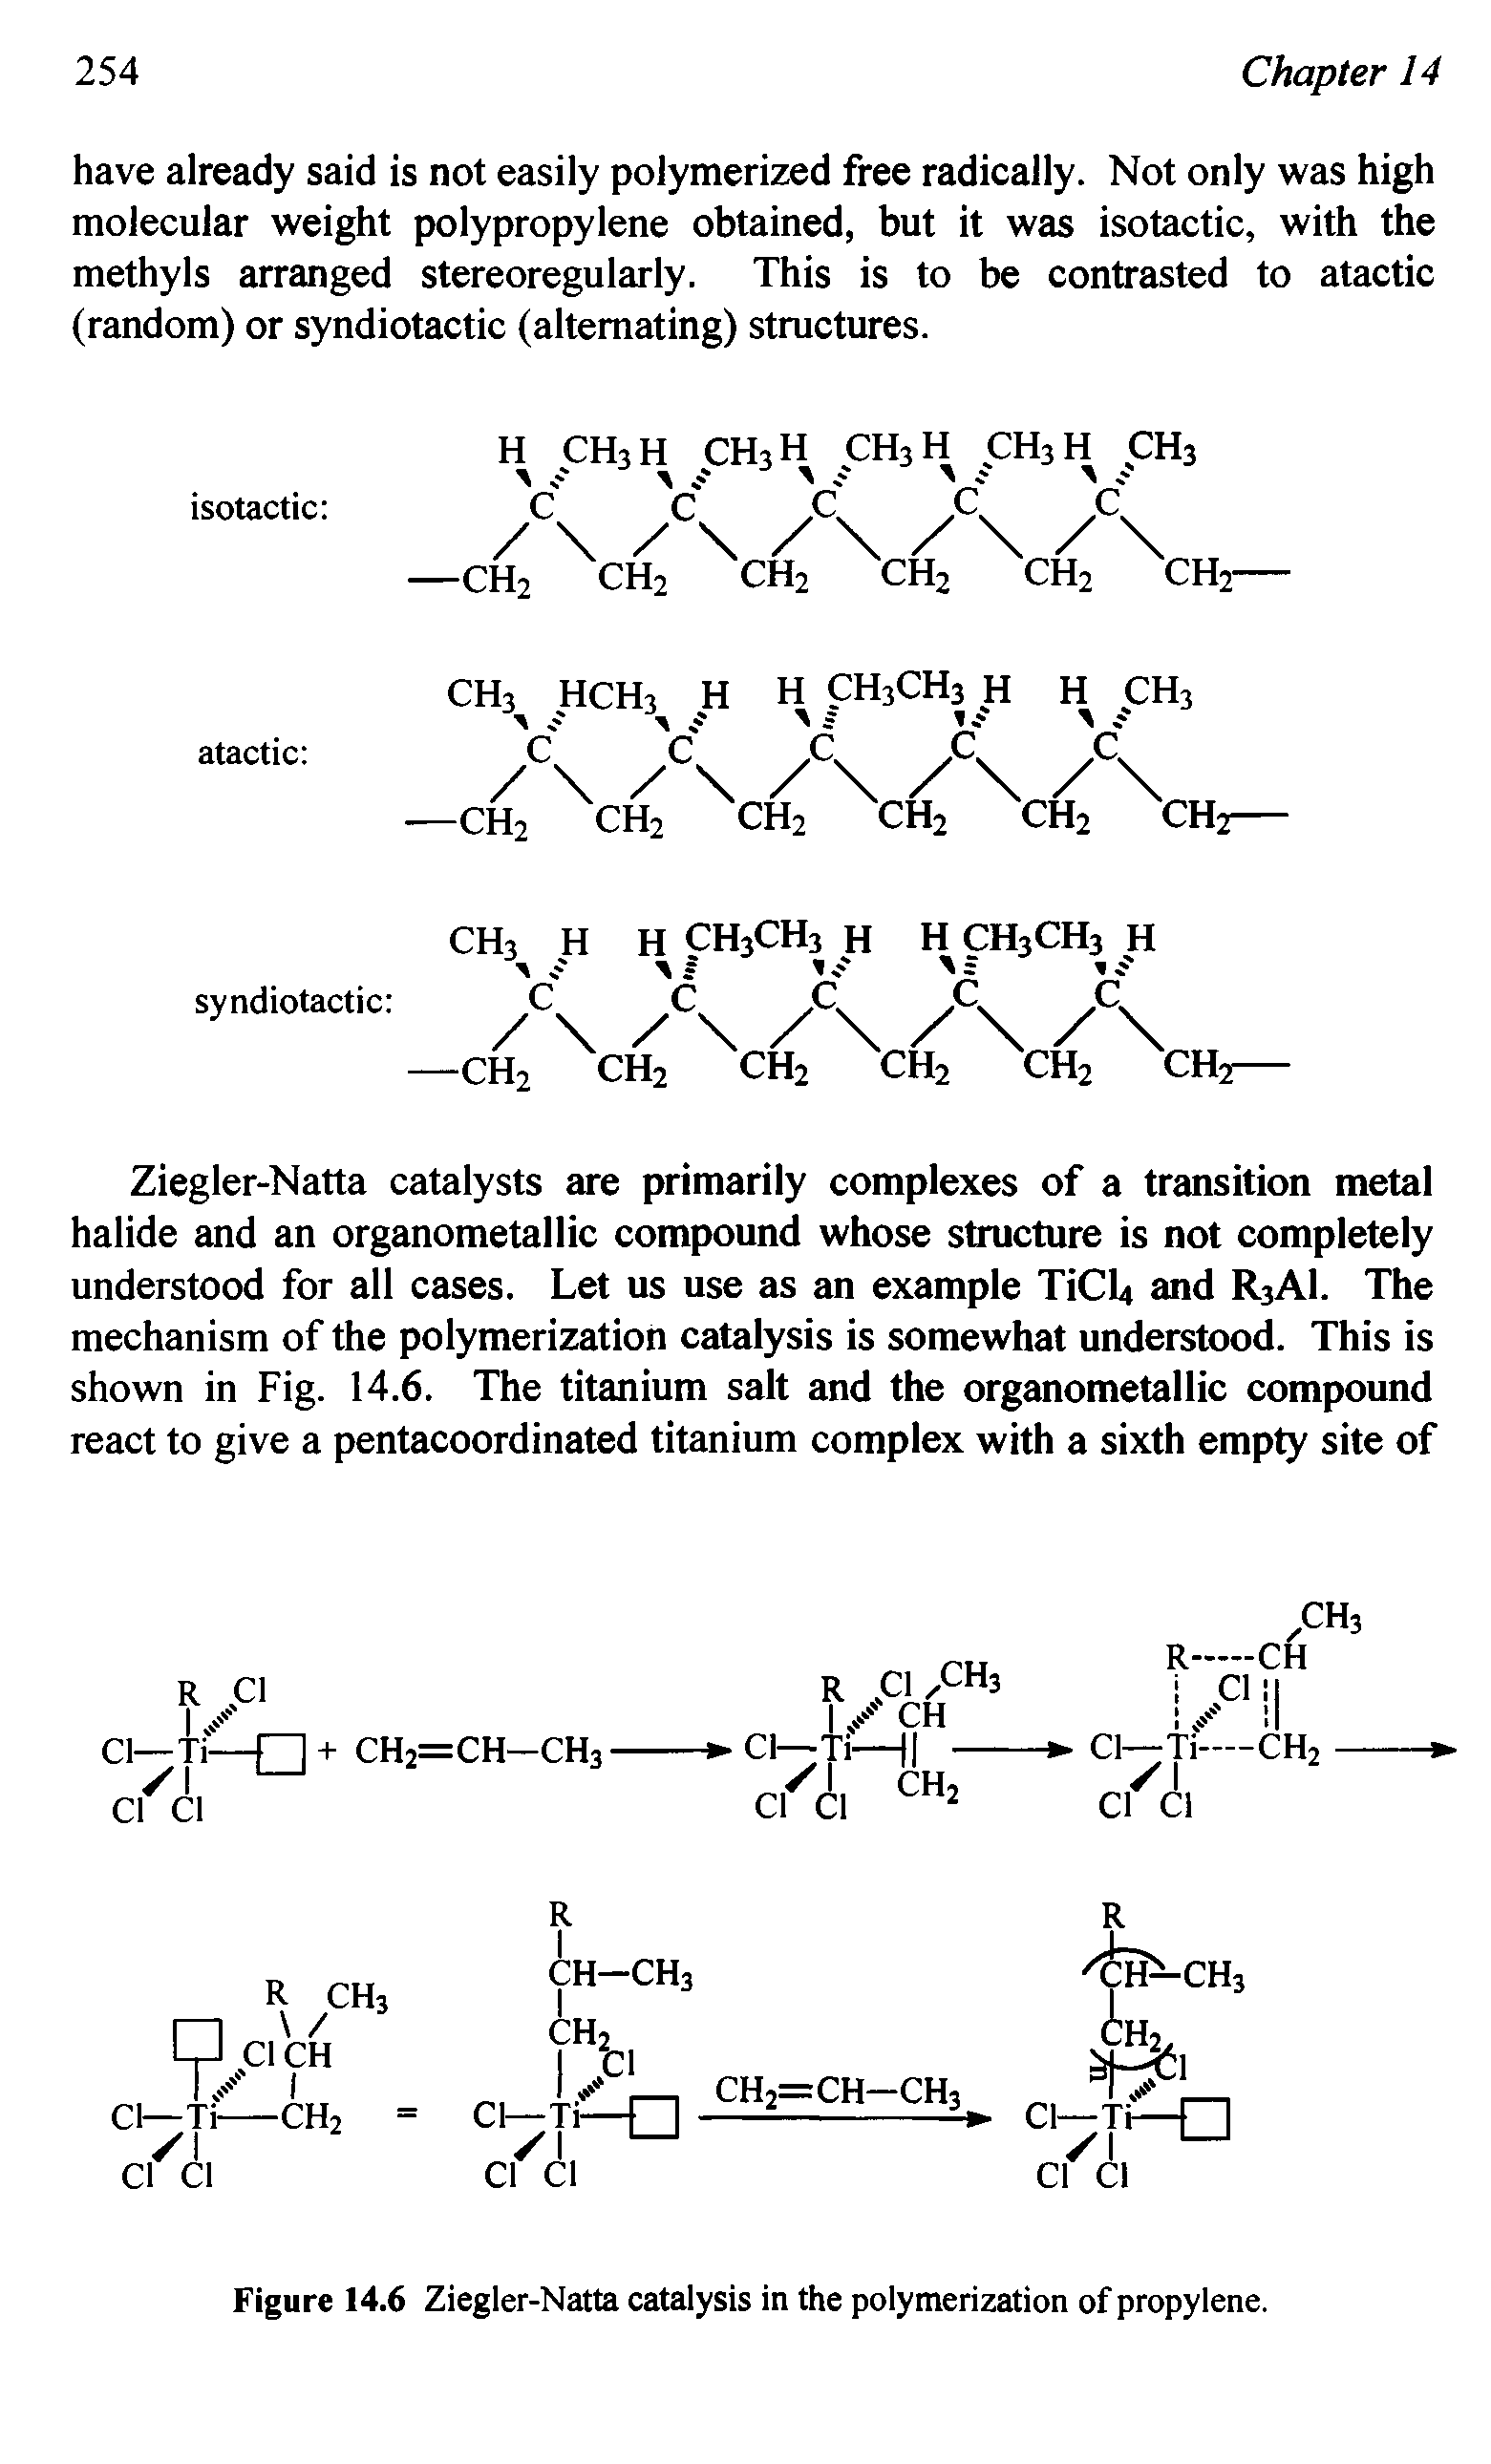 Figure 14.6 Ziegler-Natta catalysis in the polymerization of propylene.